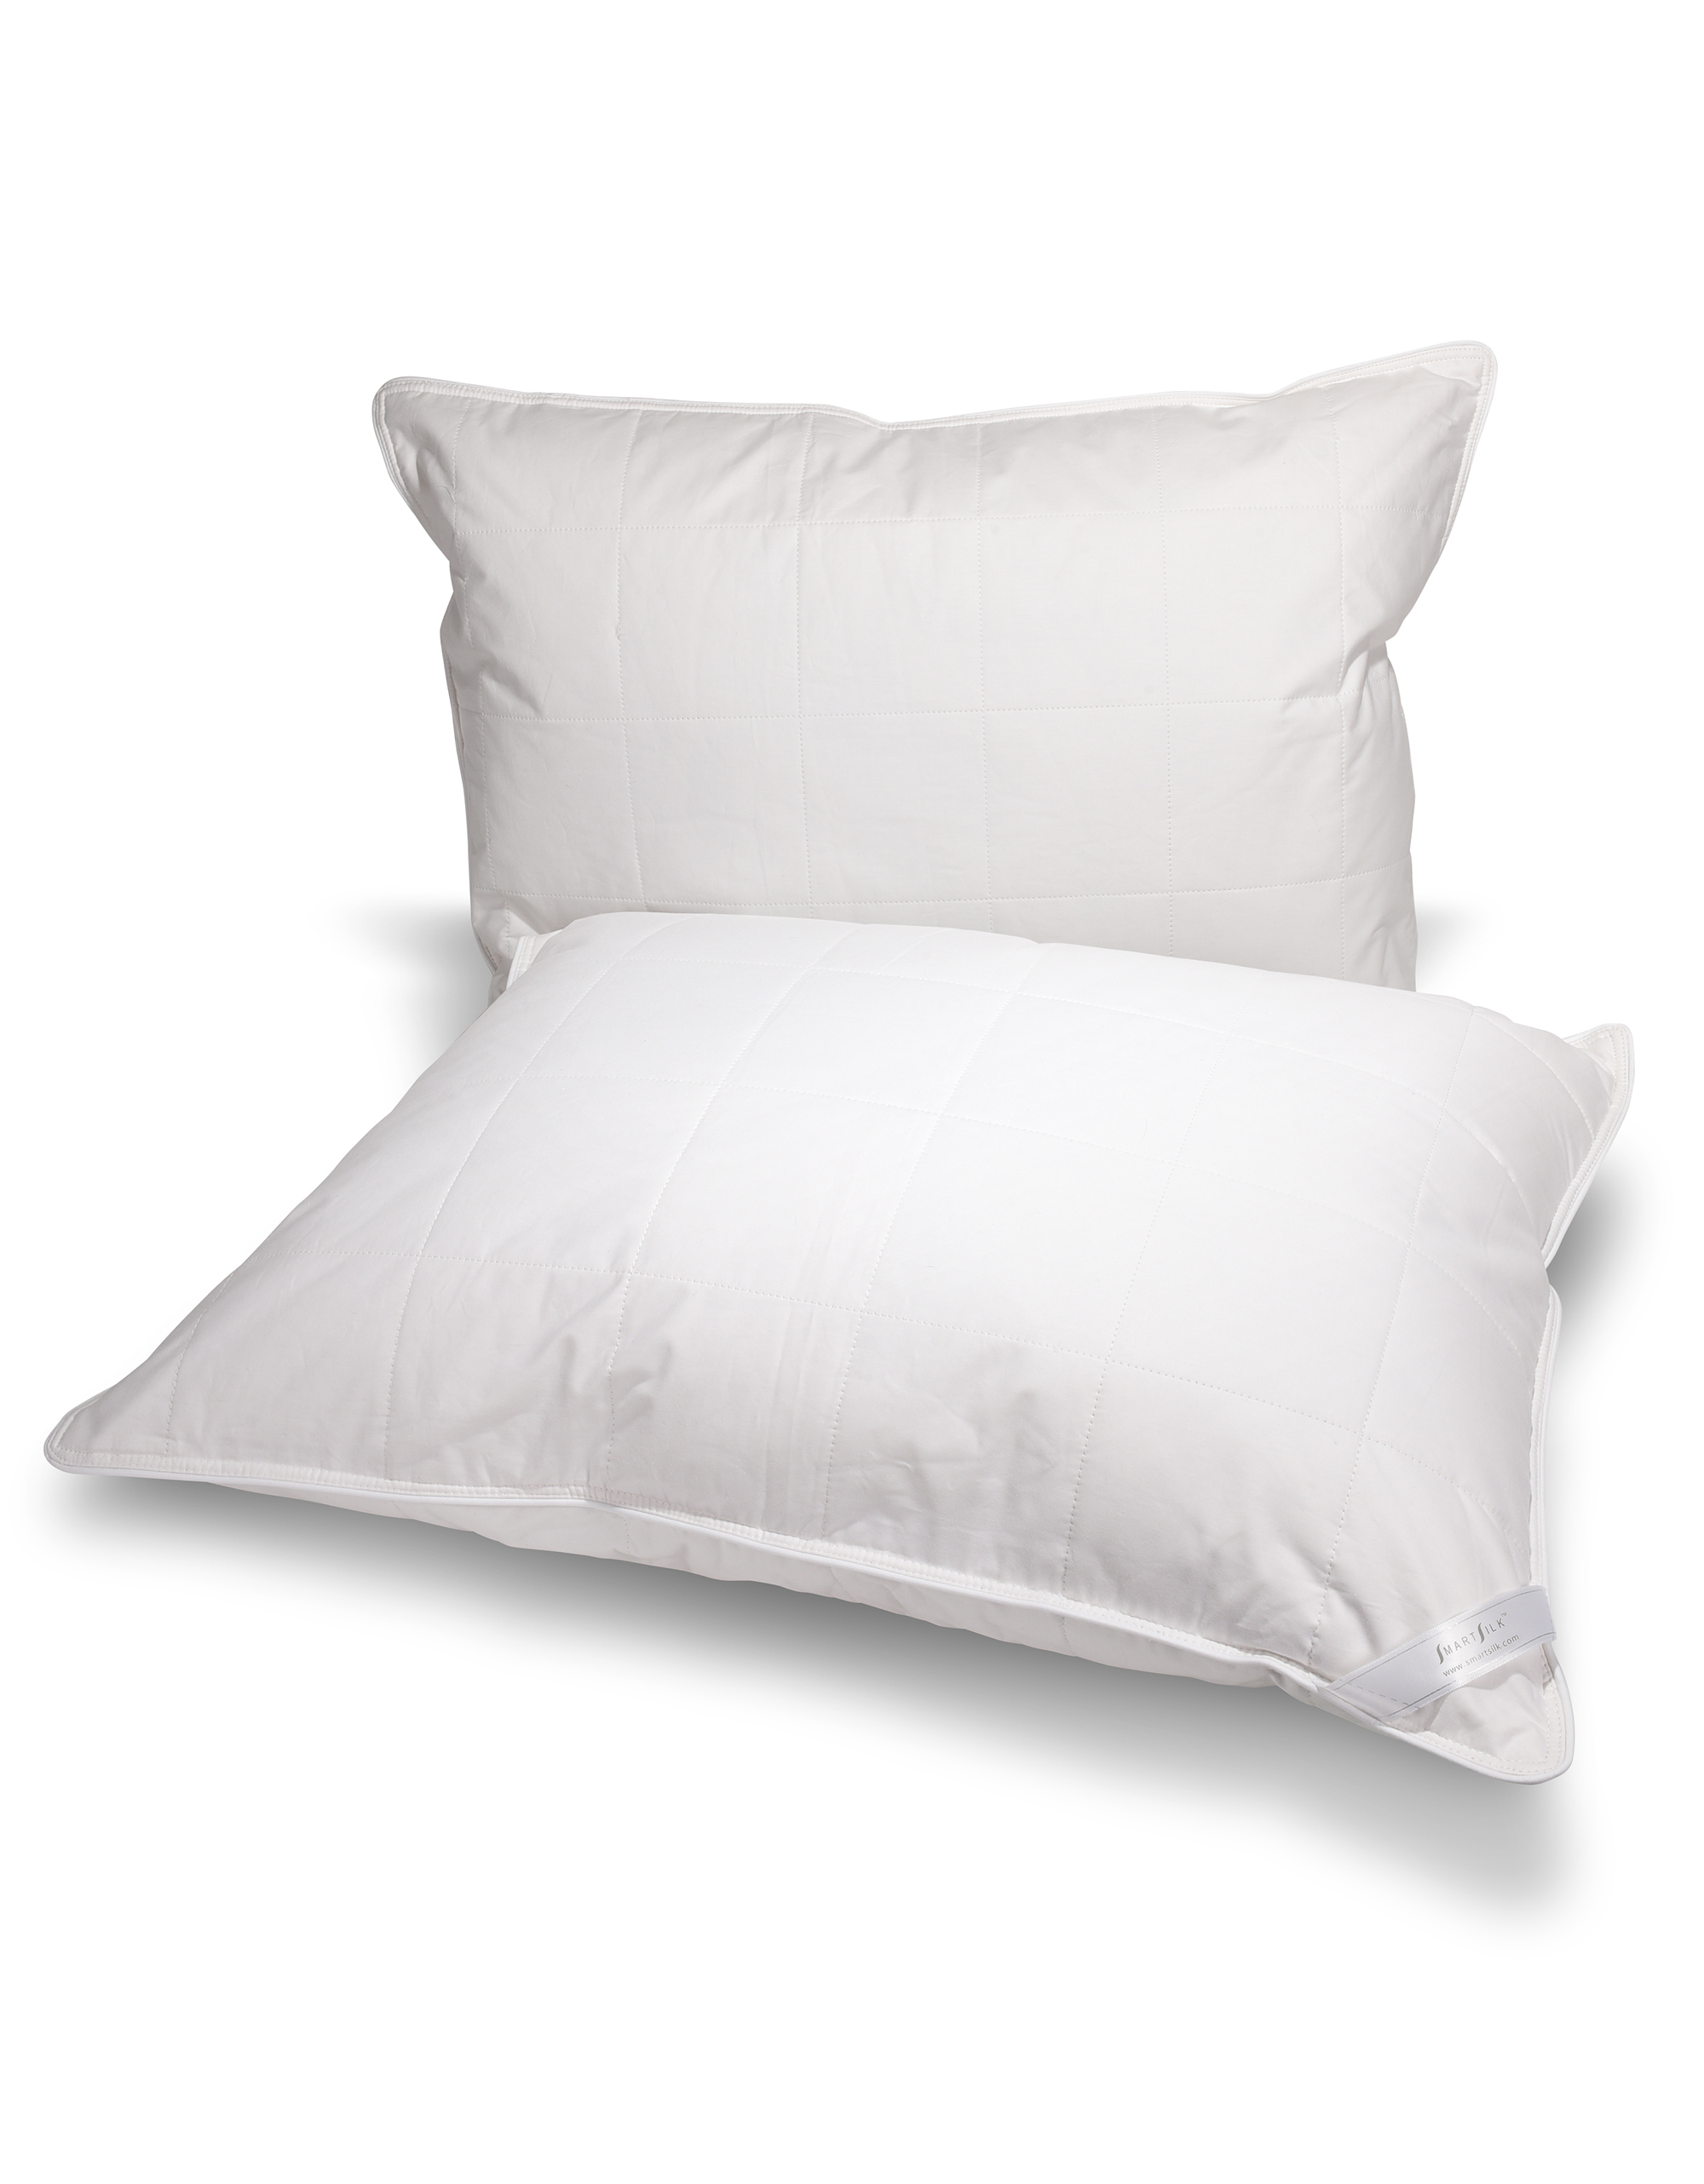 64133-l3 Pillow Comfort Level 3 - King